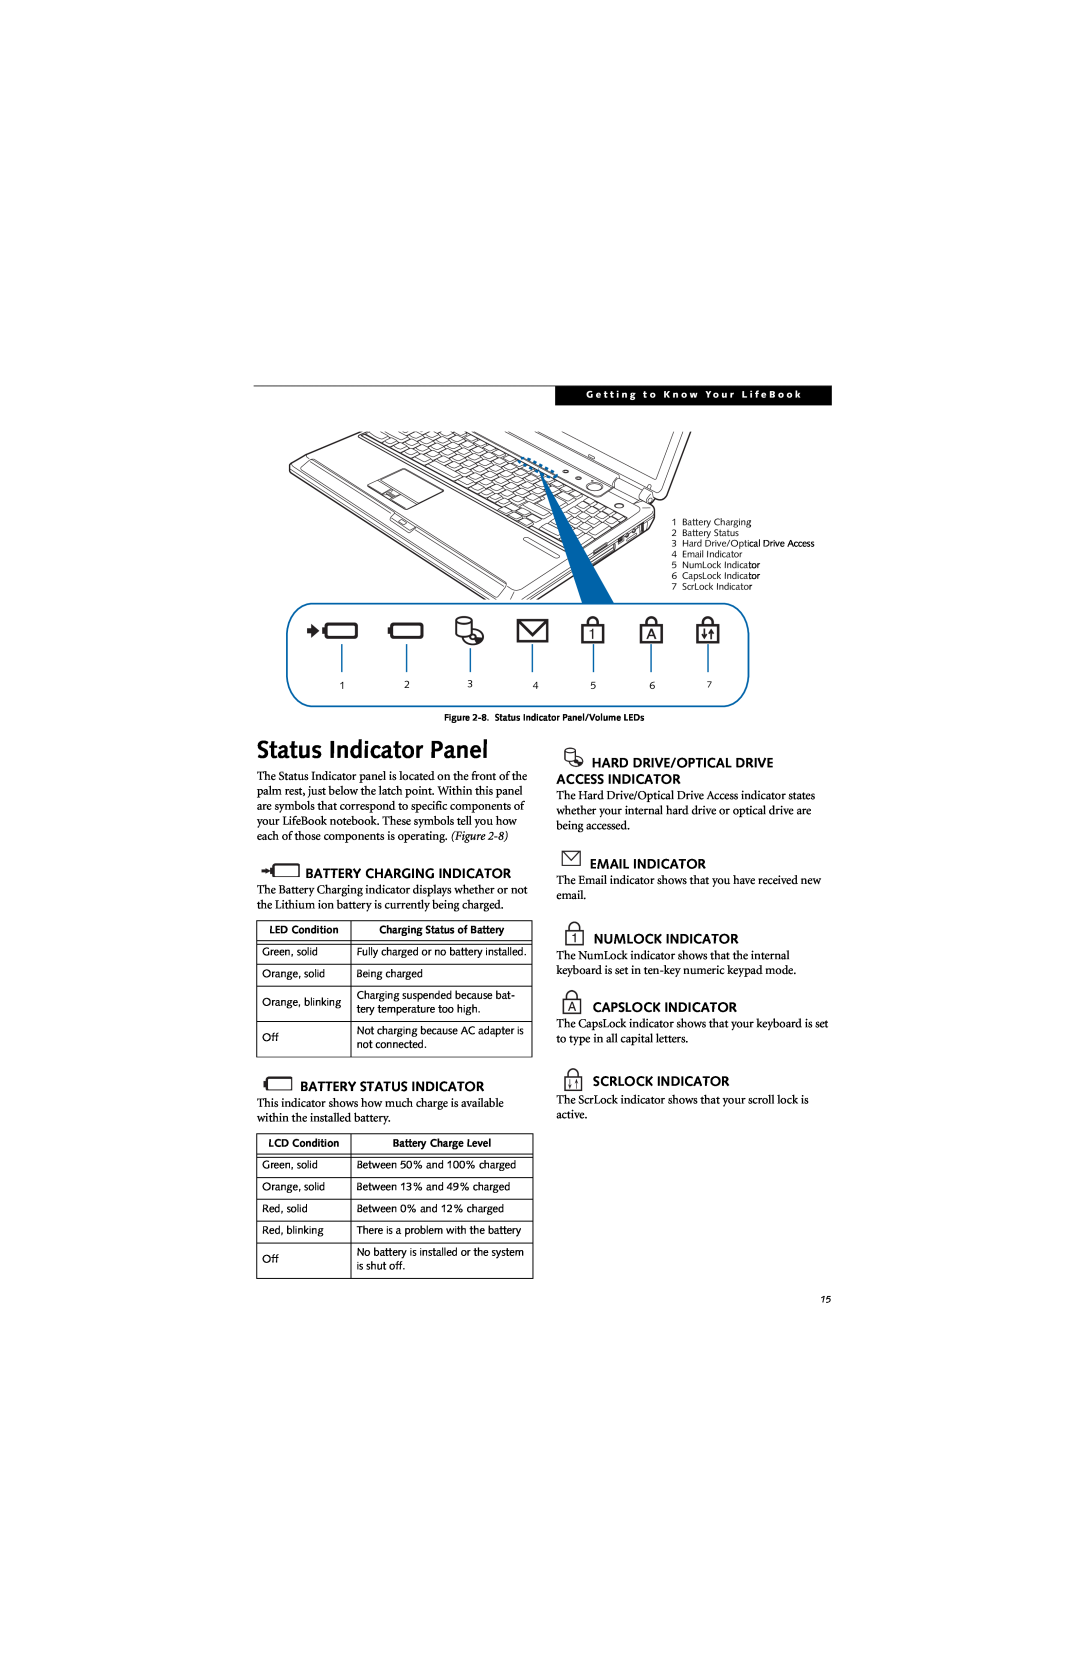 Fujitsu N6420 manual Status Indicator Panel, Hard Drive/Optical Drive Access Indicator, Battery Charging Indicator 